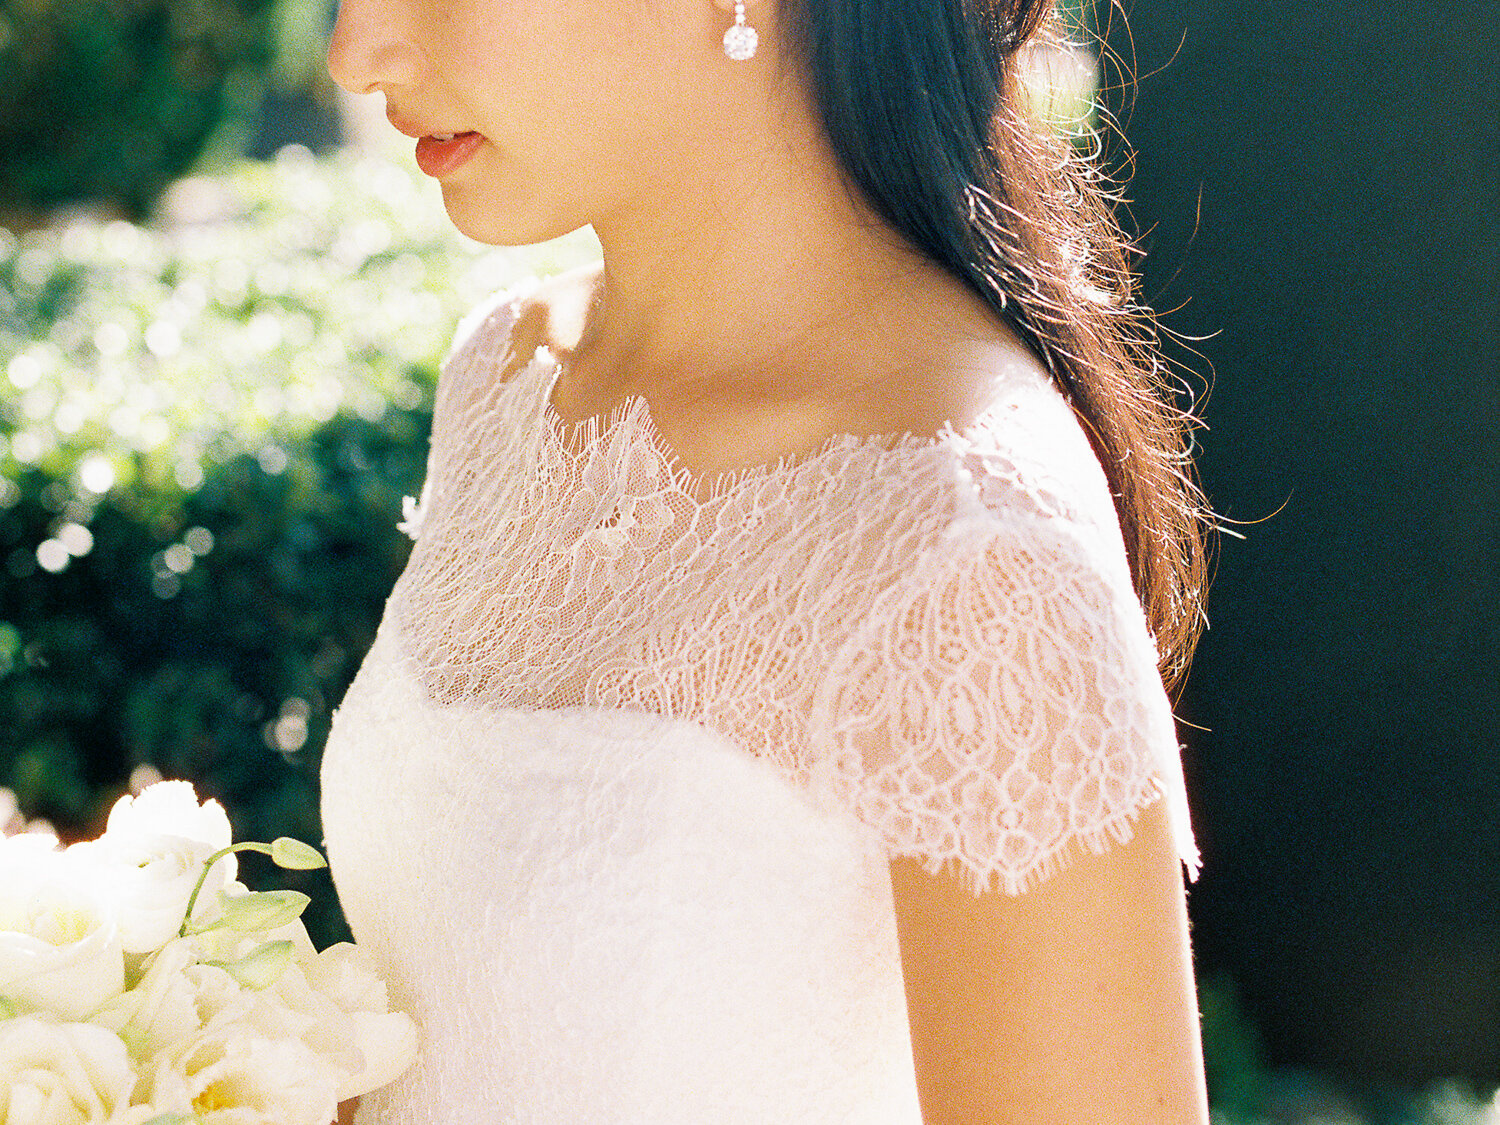 wedding-dress-detail